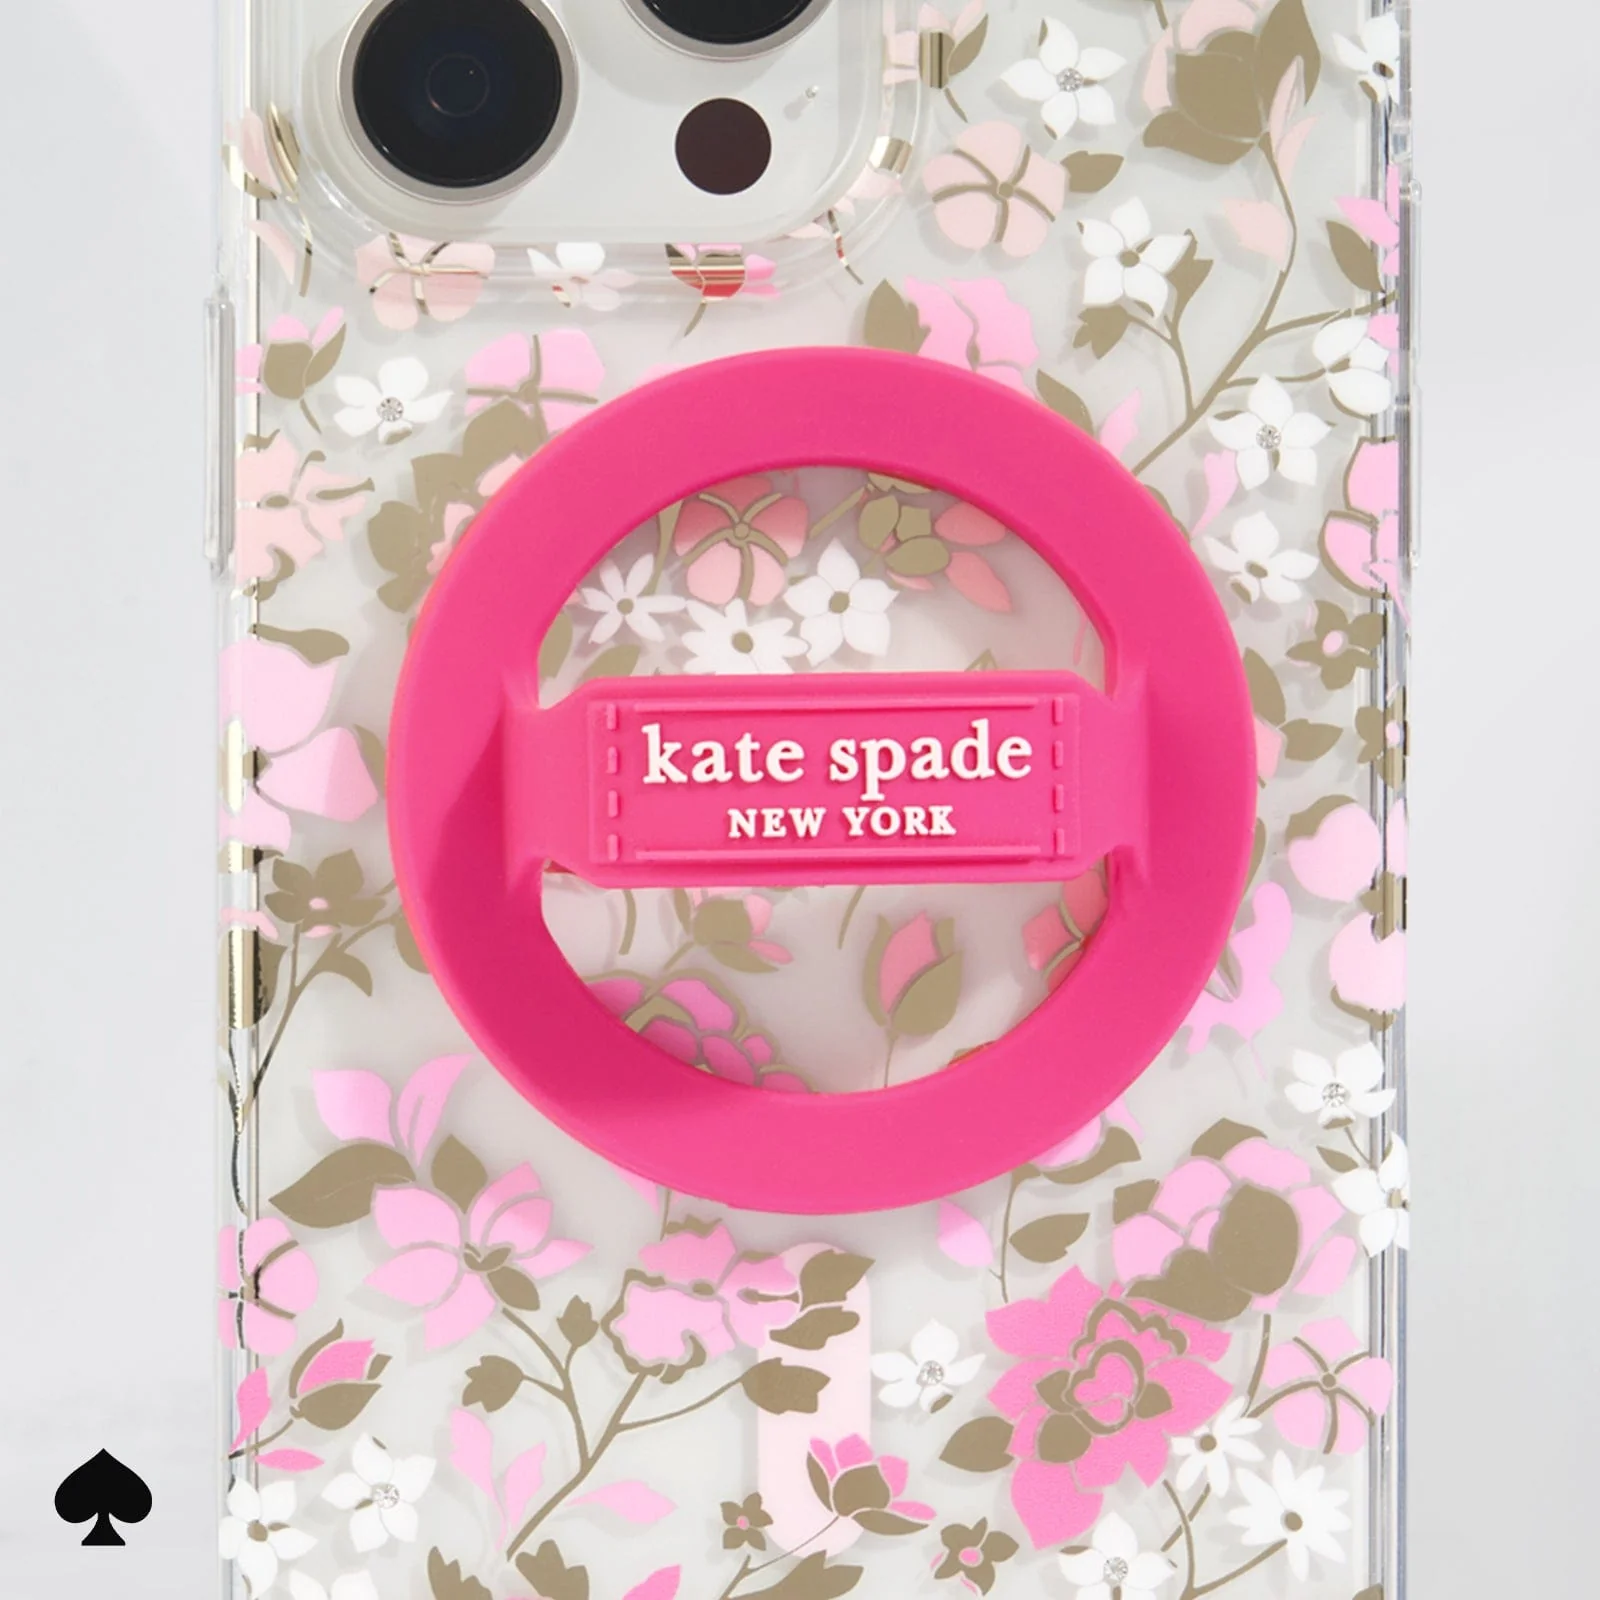 Kate Spade New York รุ่น Magnetic Loop Grip - แหวนติดหลังมือถือ - สี Pom Pom Pink